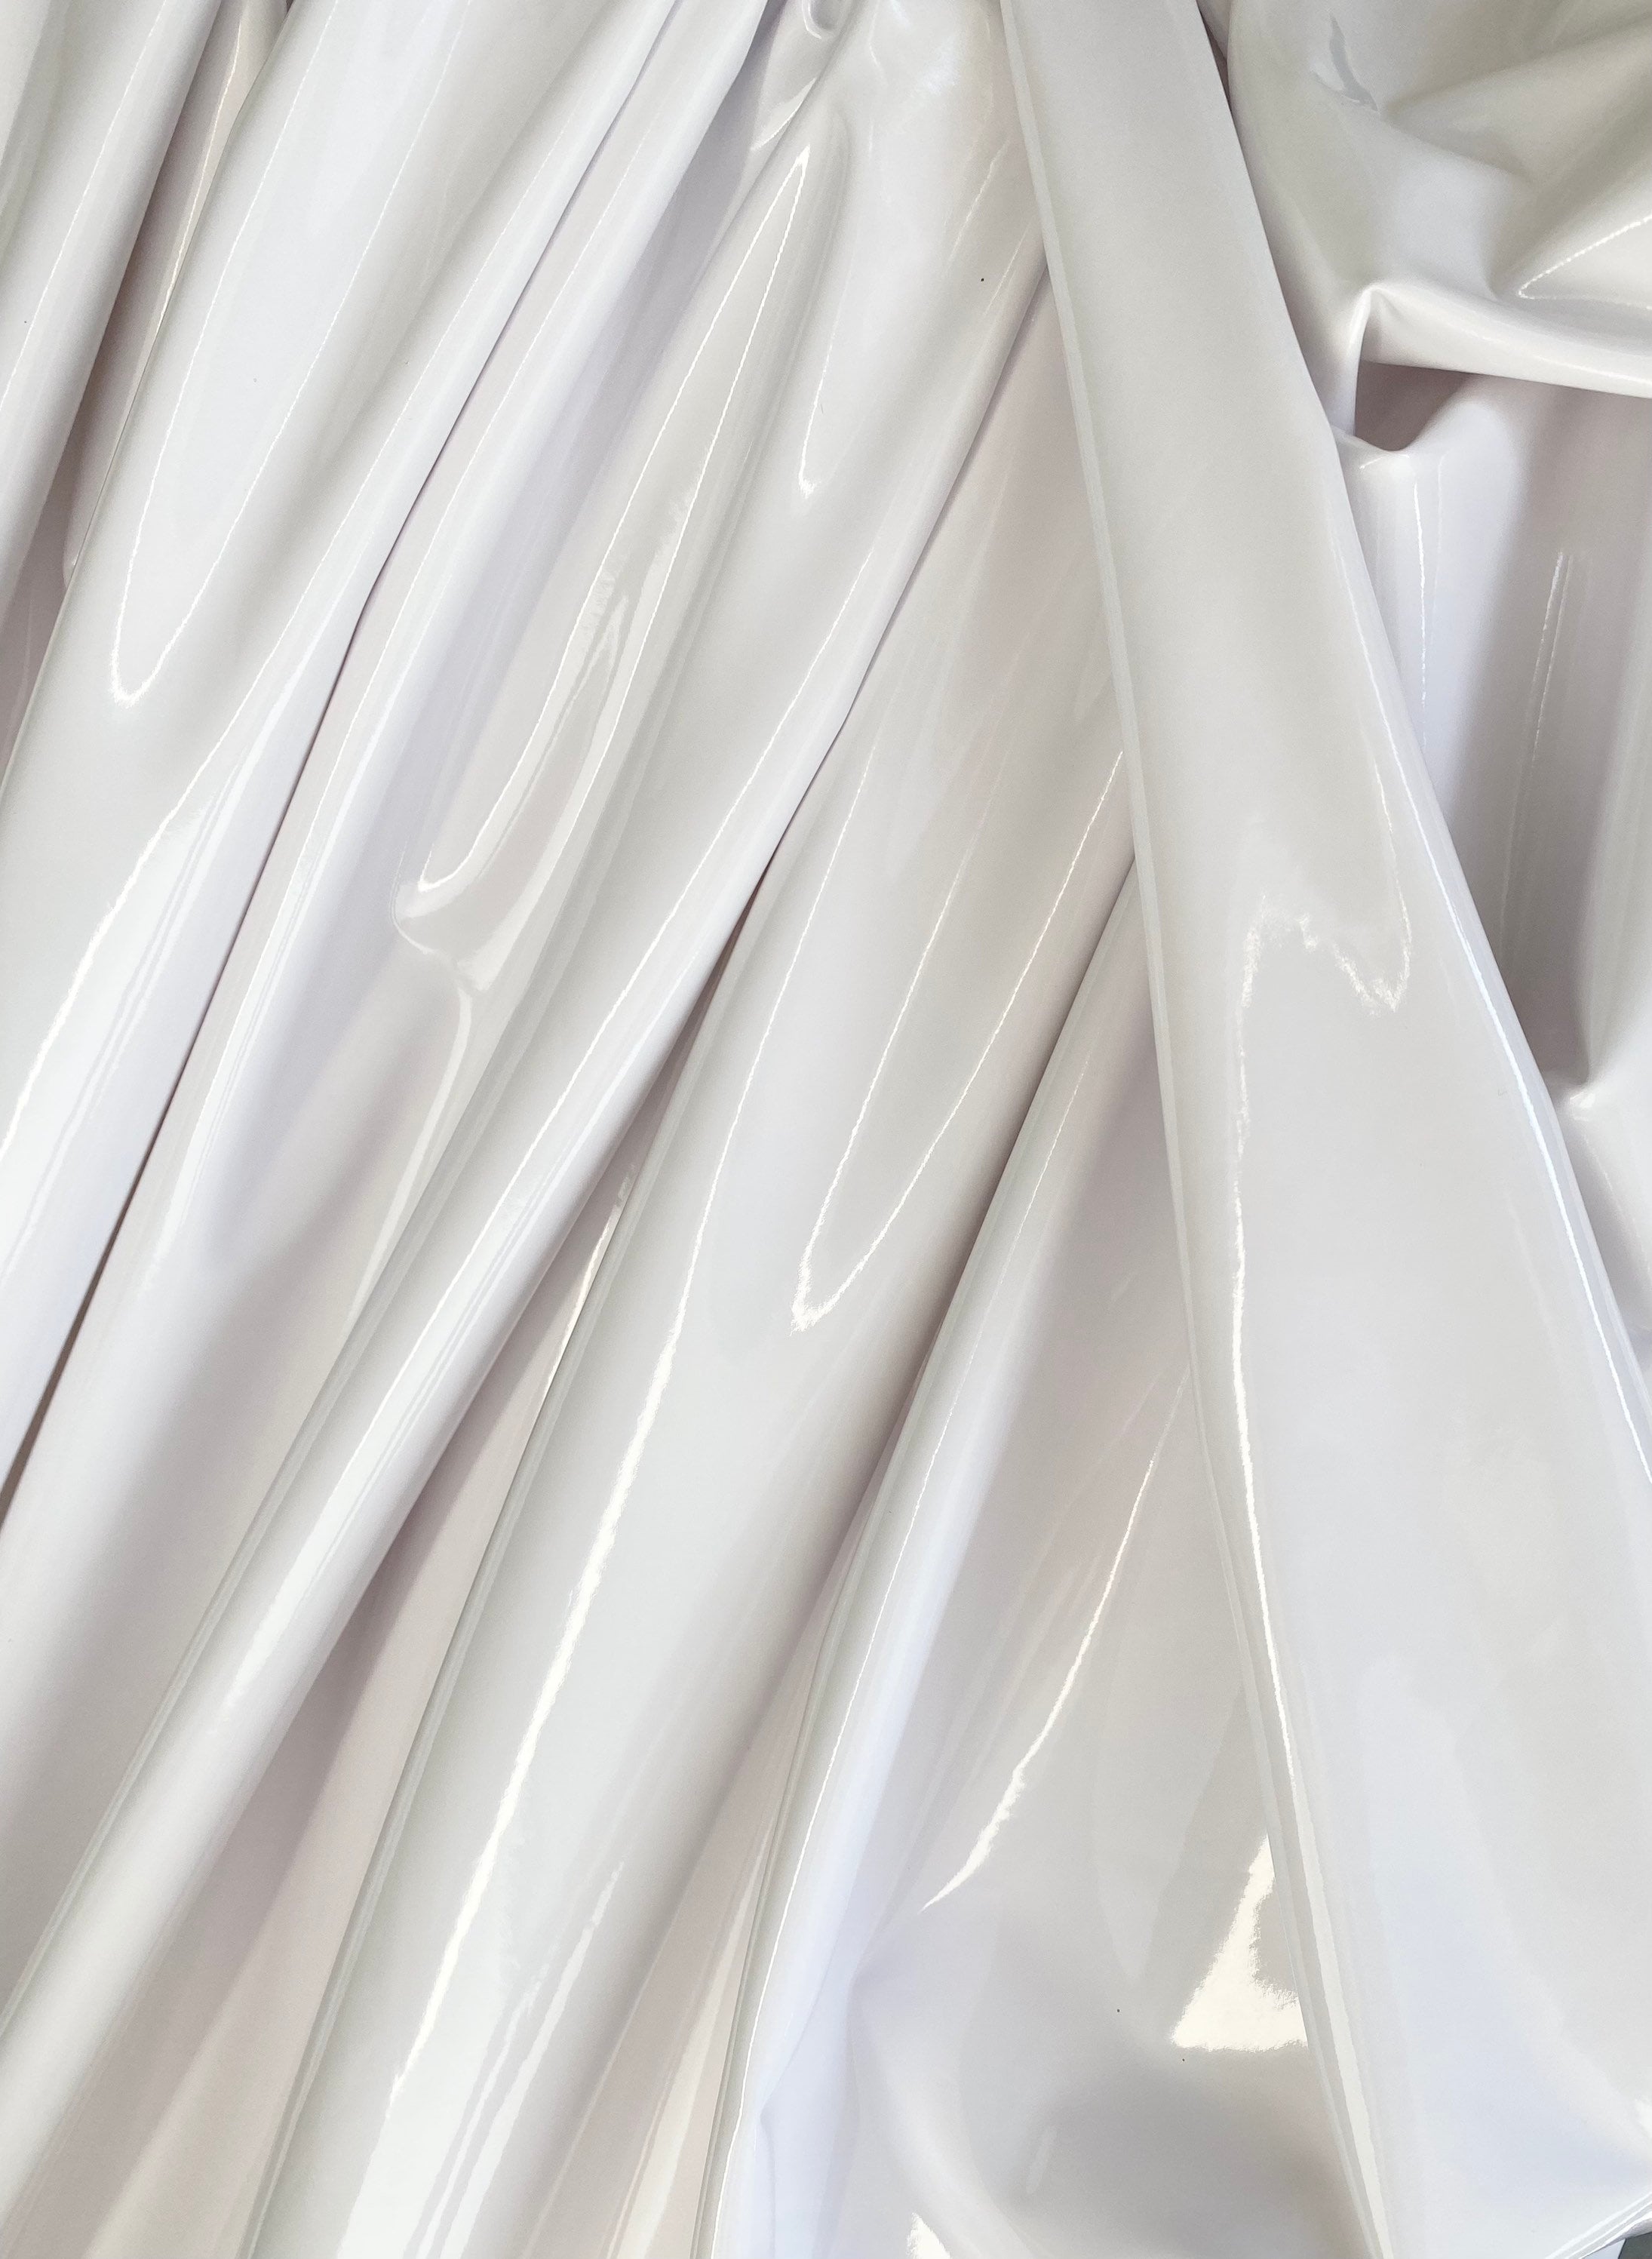 White Shiny Glossy PVC Pleather 4 Way Stretch Fabric , White Latex Fabric  by Yard, White Faux Patent Leather, White Stretch PVC Vinyl Fabric -   Norway